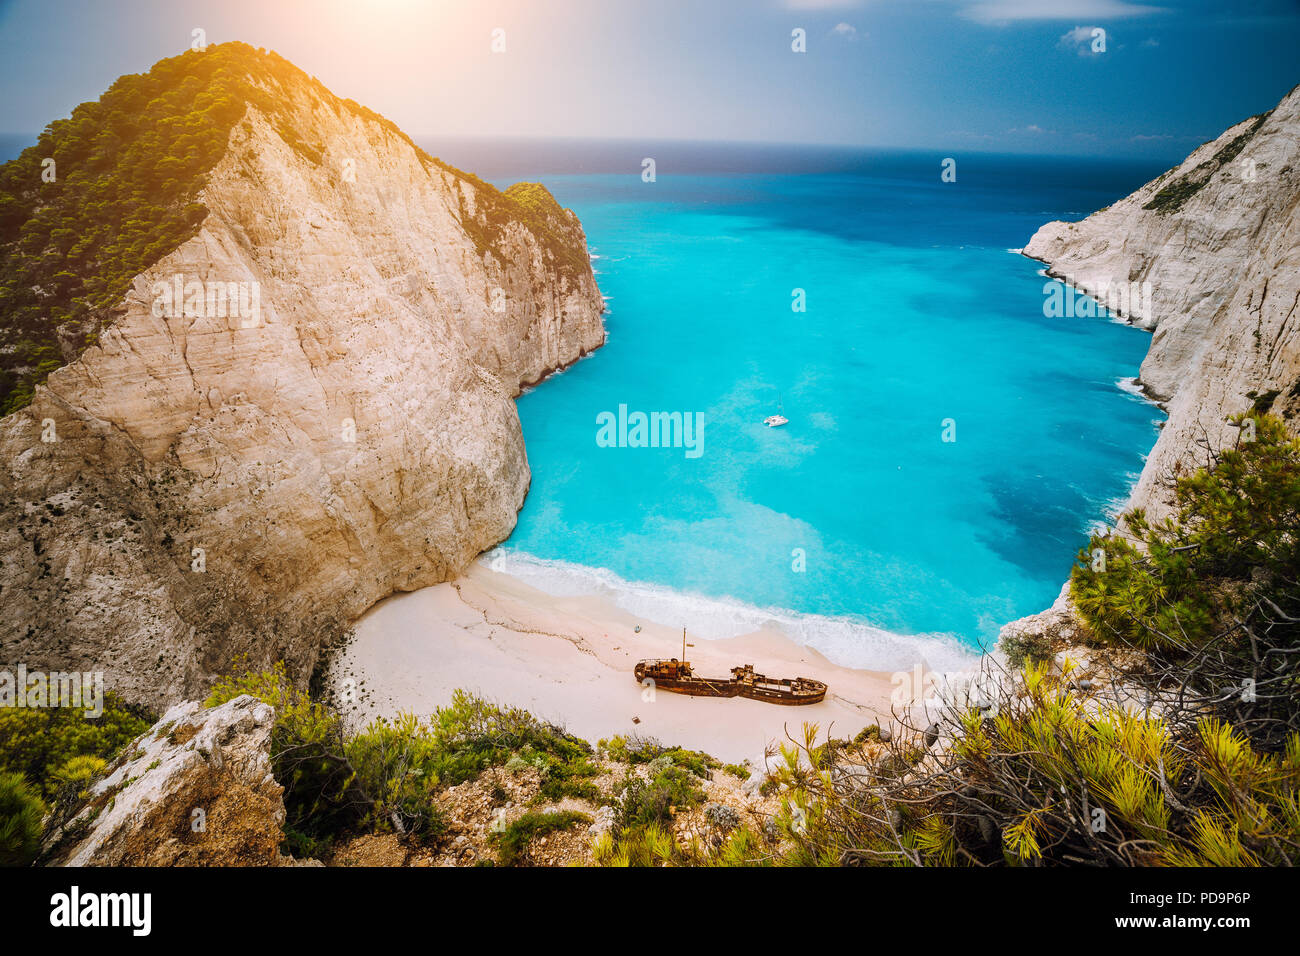 Shipwreck on Navagio beach. Azure turquoise sea water and paradise like sandy beach. Famous tourist landmark on Zakynthos island, Greece Stock Photo